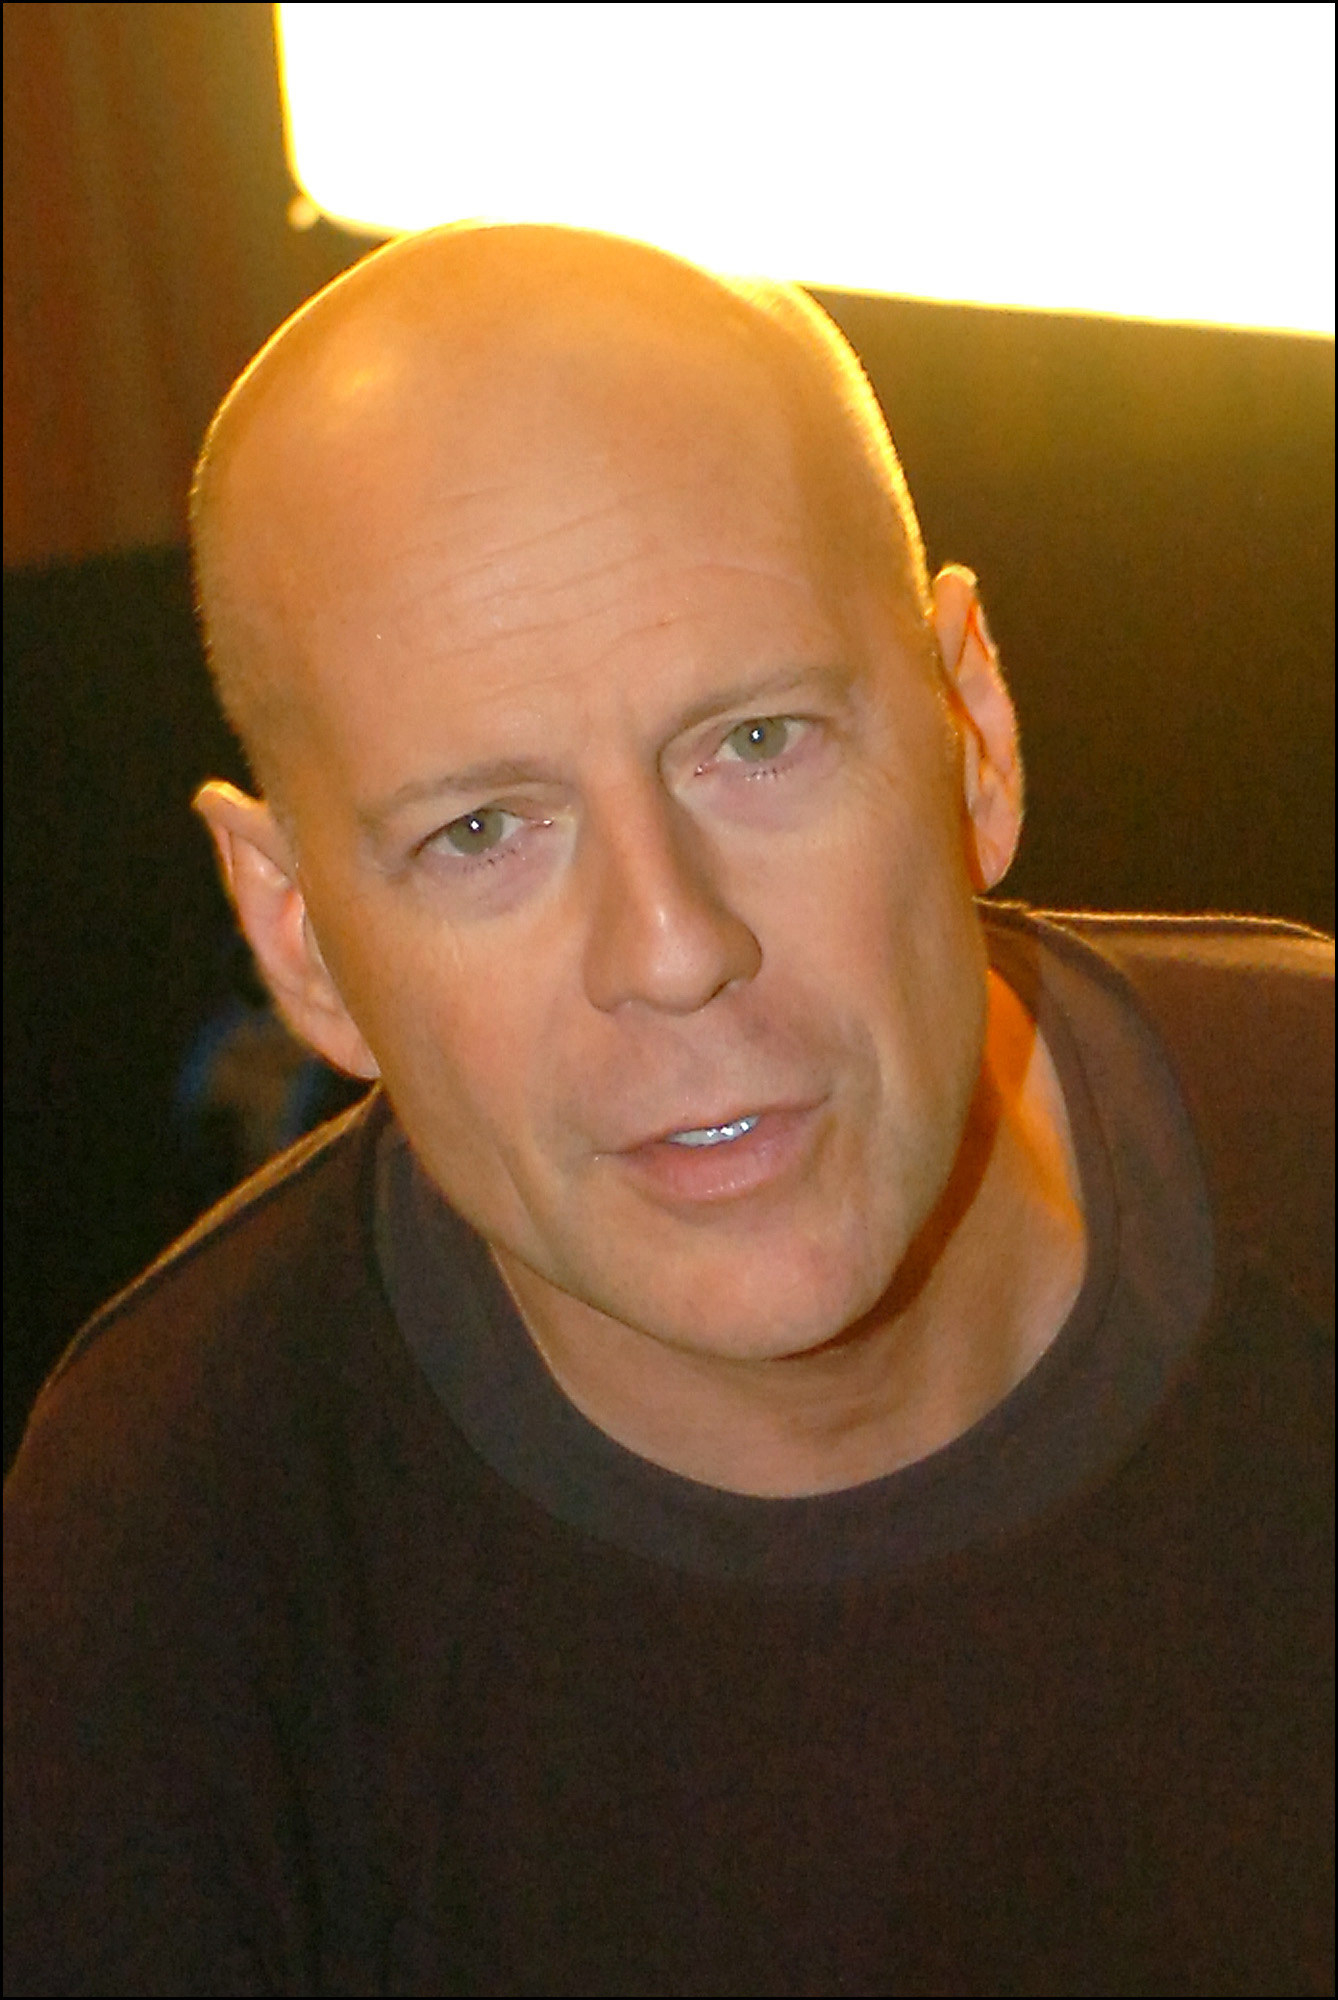 Bruce Willis posing